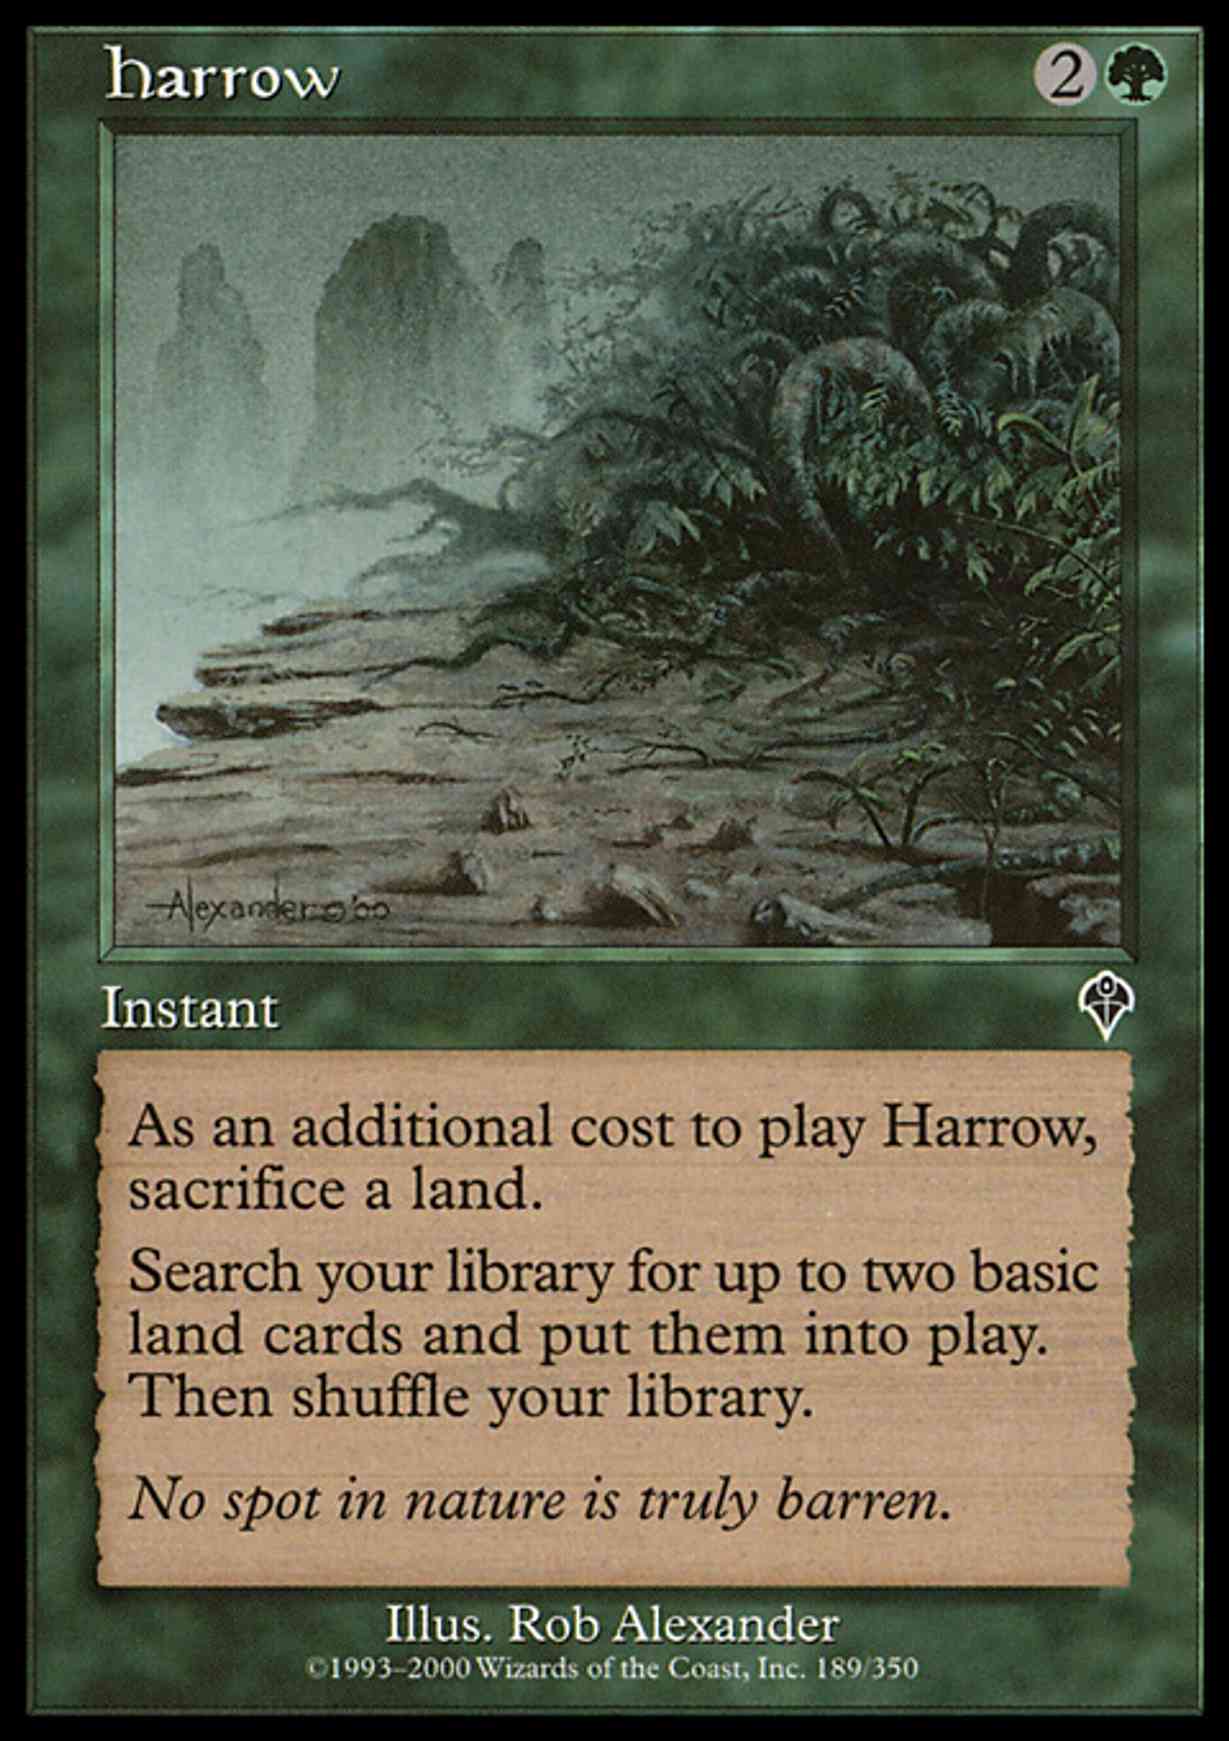 Harrow magic card front